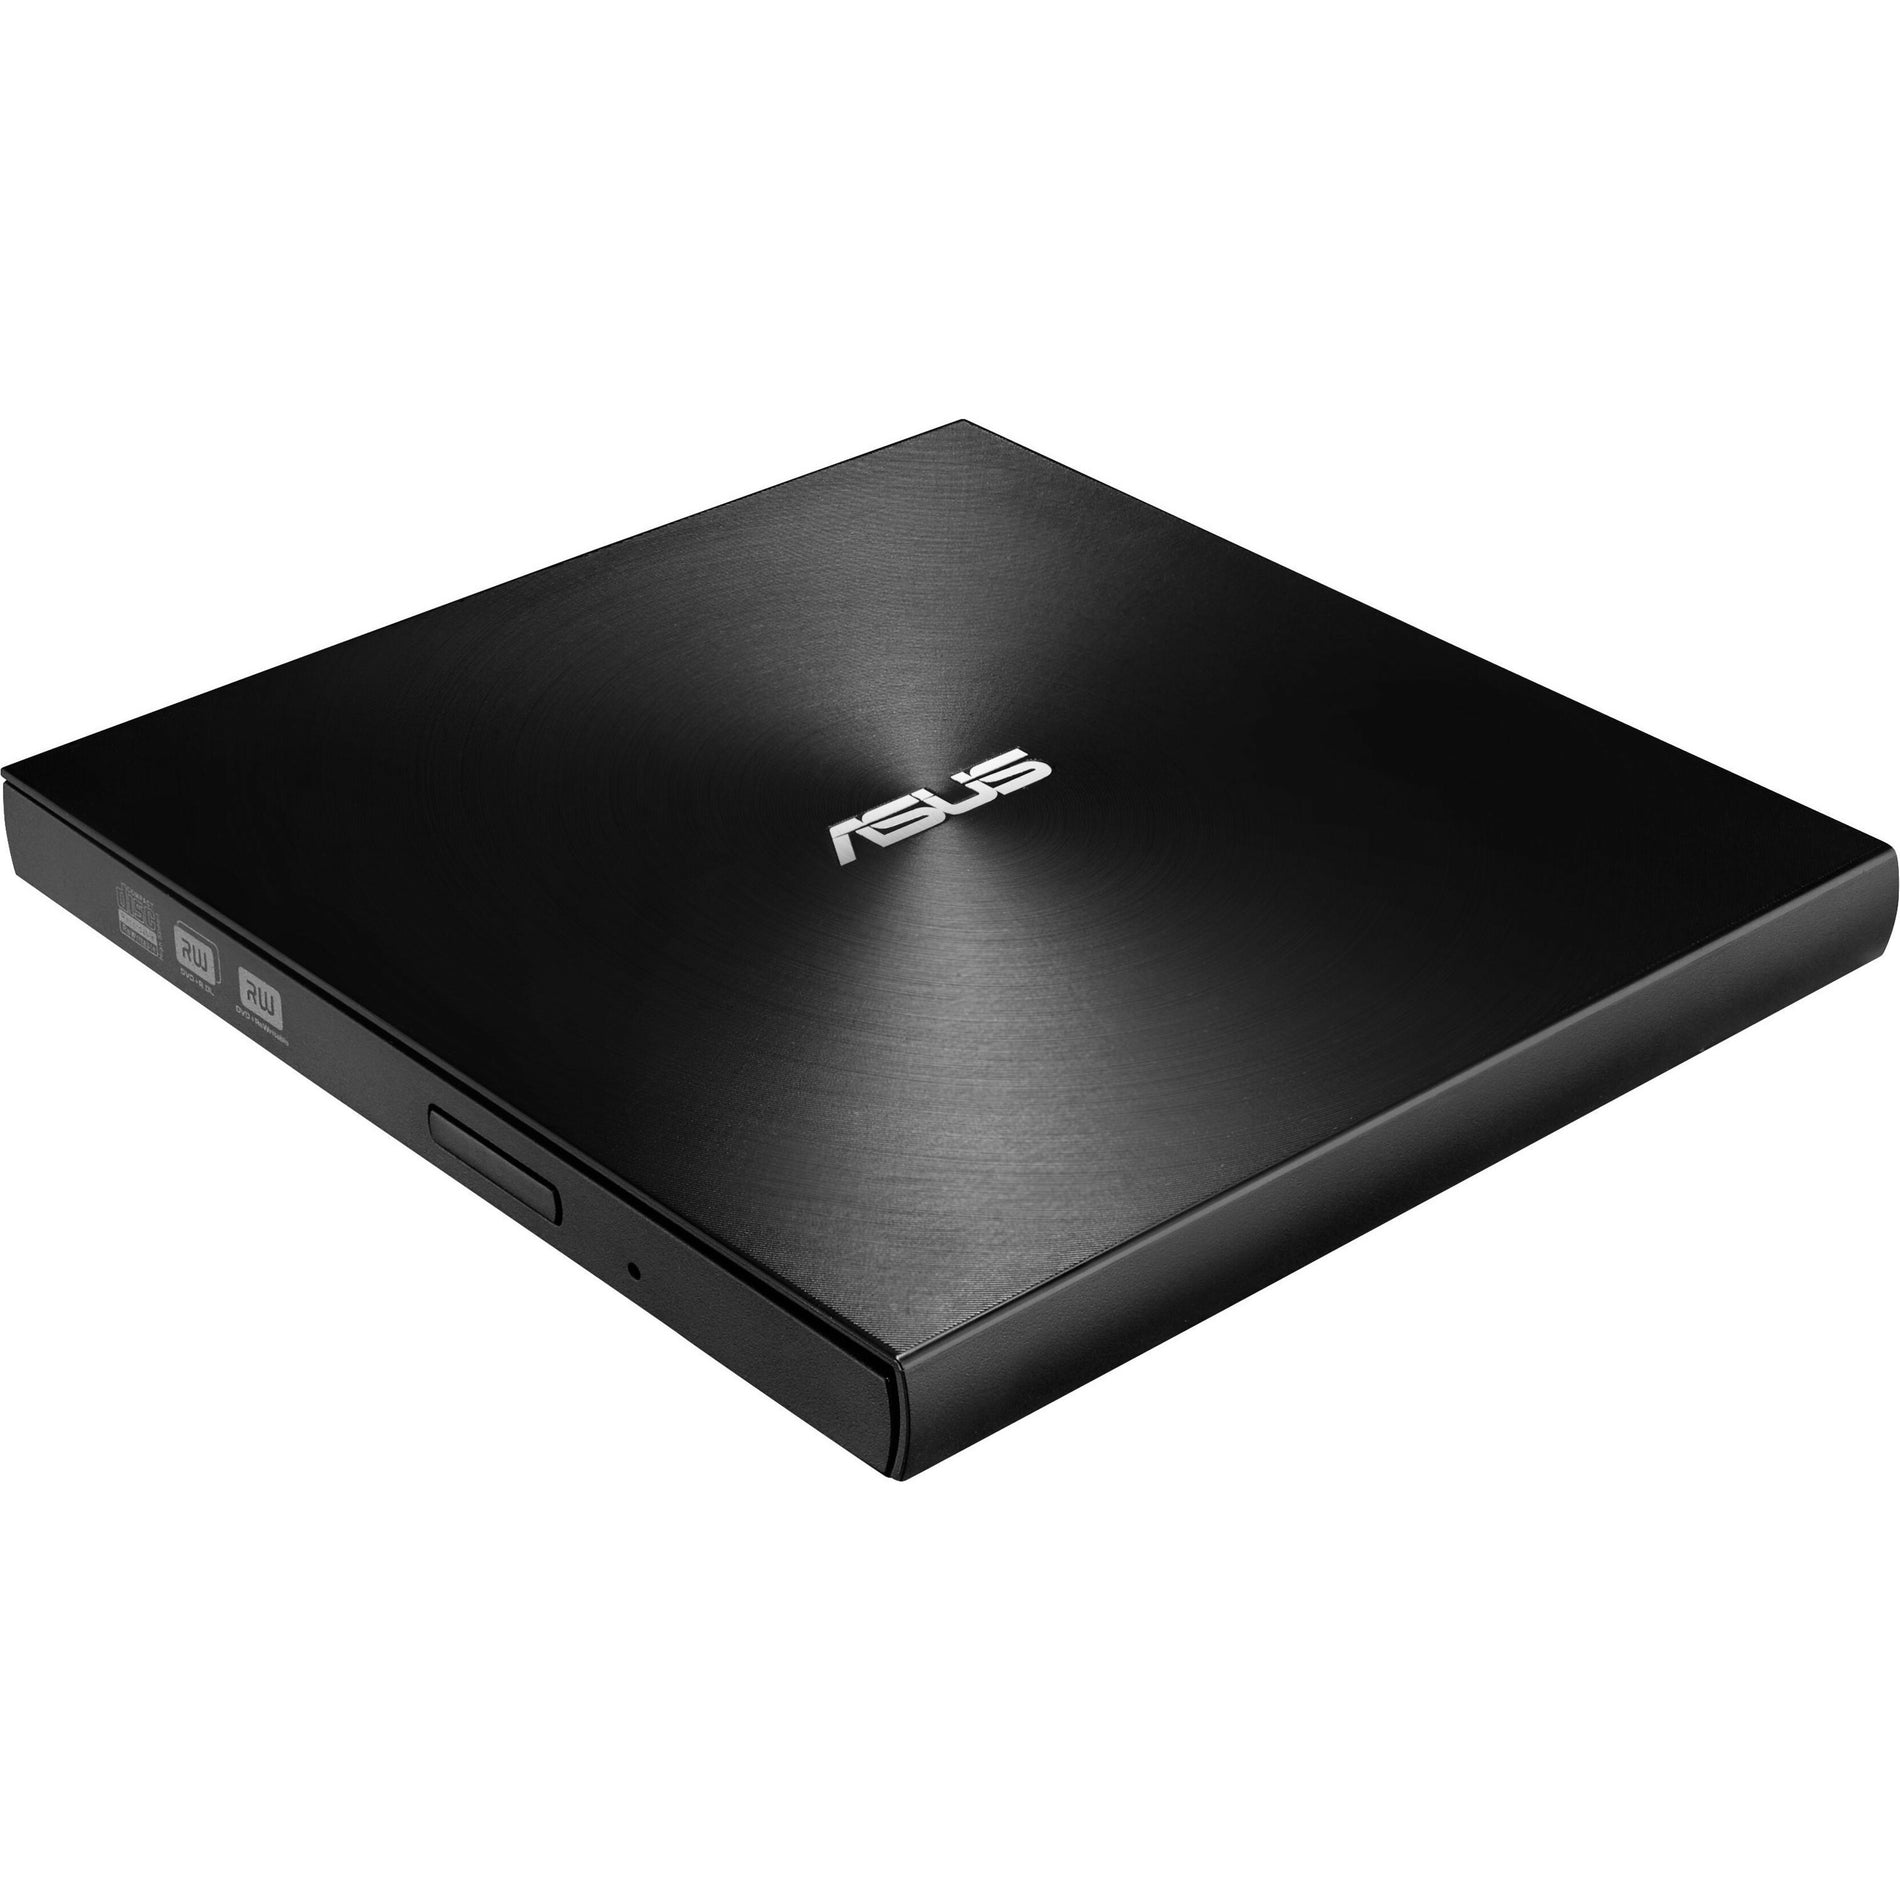 Asus SDRW-08U7M-U/BLK/G/AS External Ultra-slim DVD Writer with M-Disc Support, USB 2.0, Black